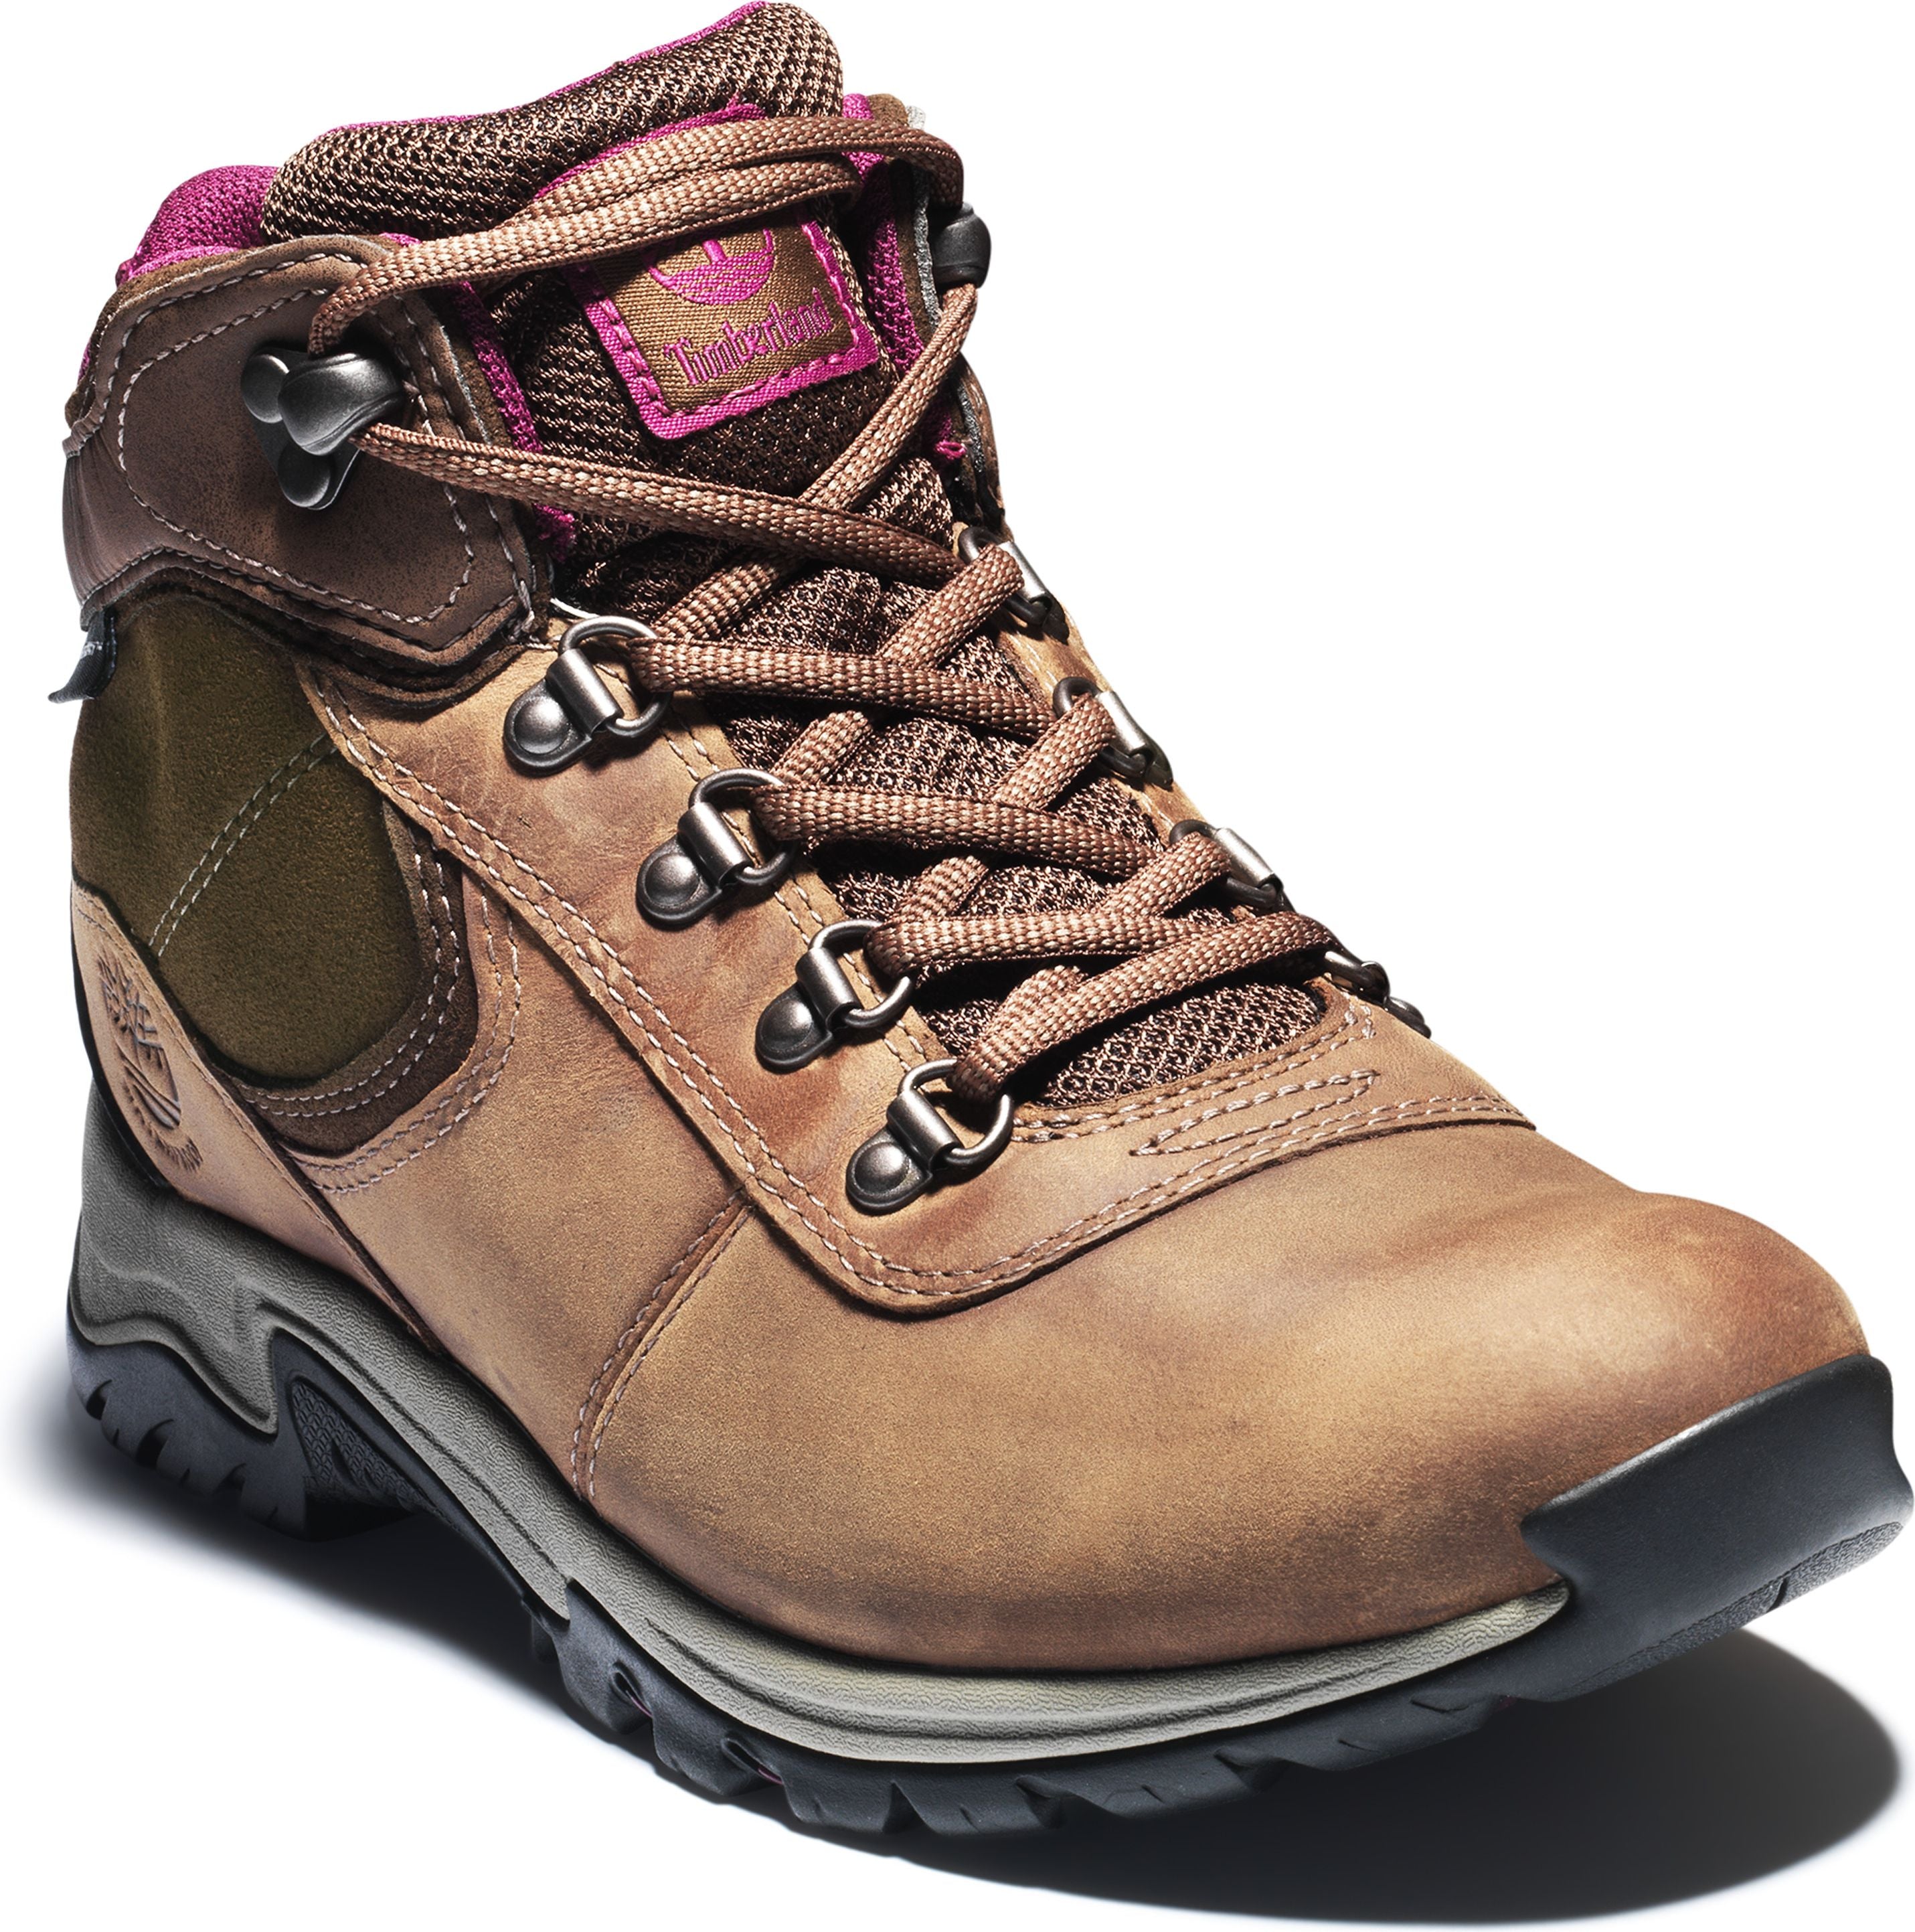 Mt Maddsen Wp Quarks Mid Brown Shoes – Medium Hiker